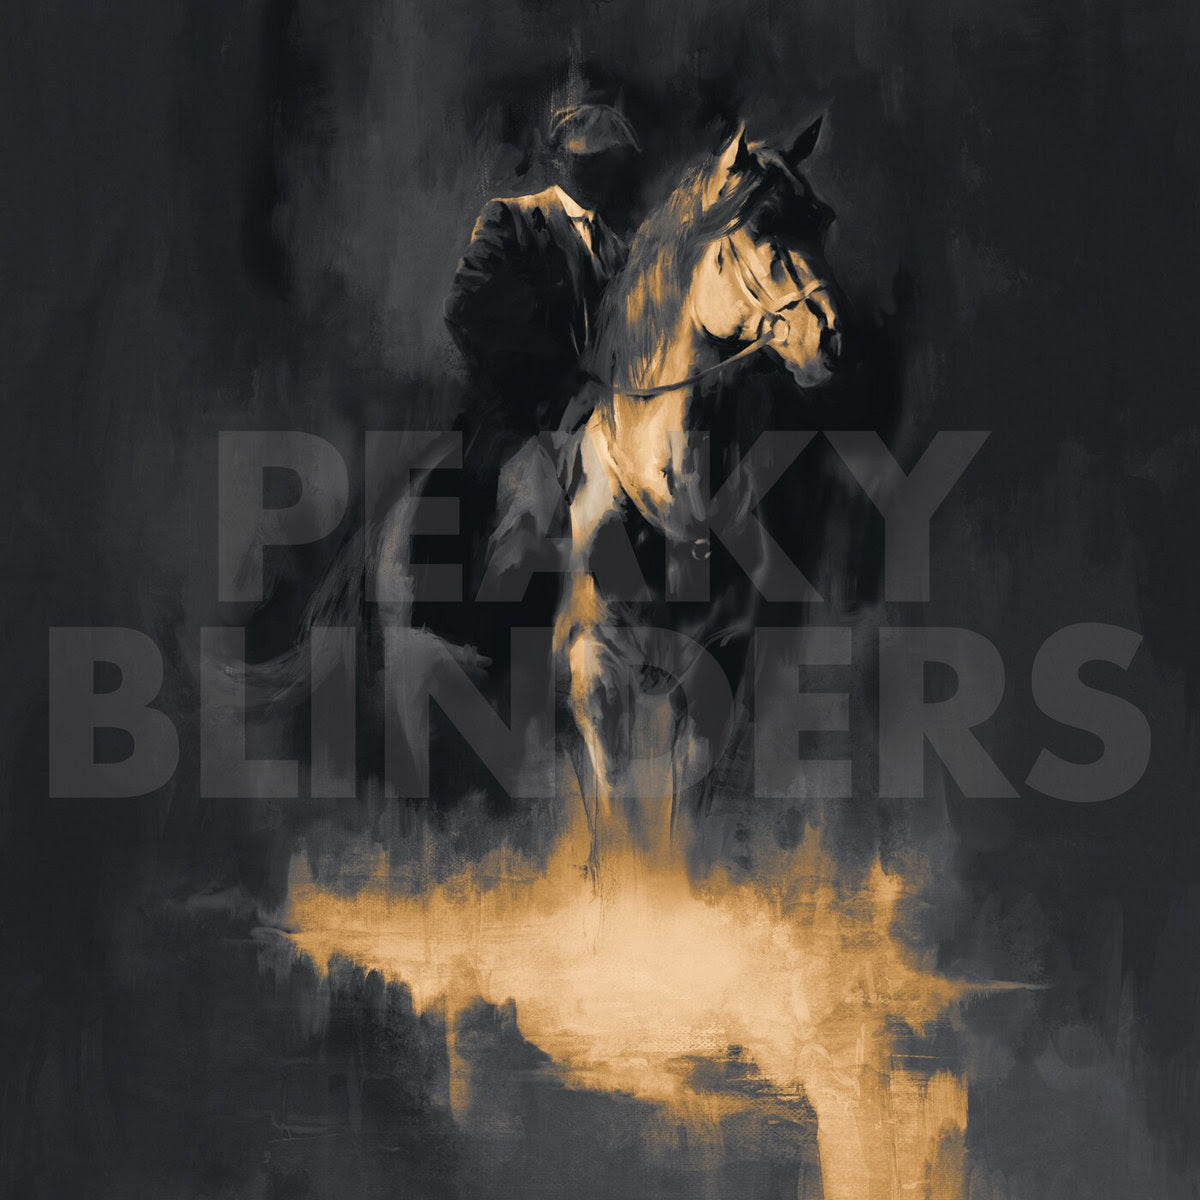 Anna Calvi - Peaky Blinders: Season 5 & 6 OST | Buy the Vinyl LP from Flying Nun Records